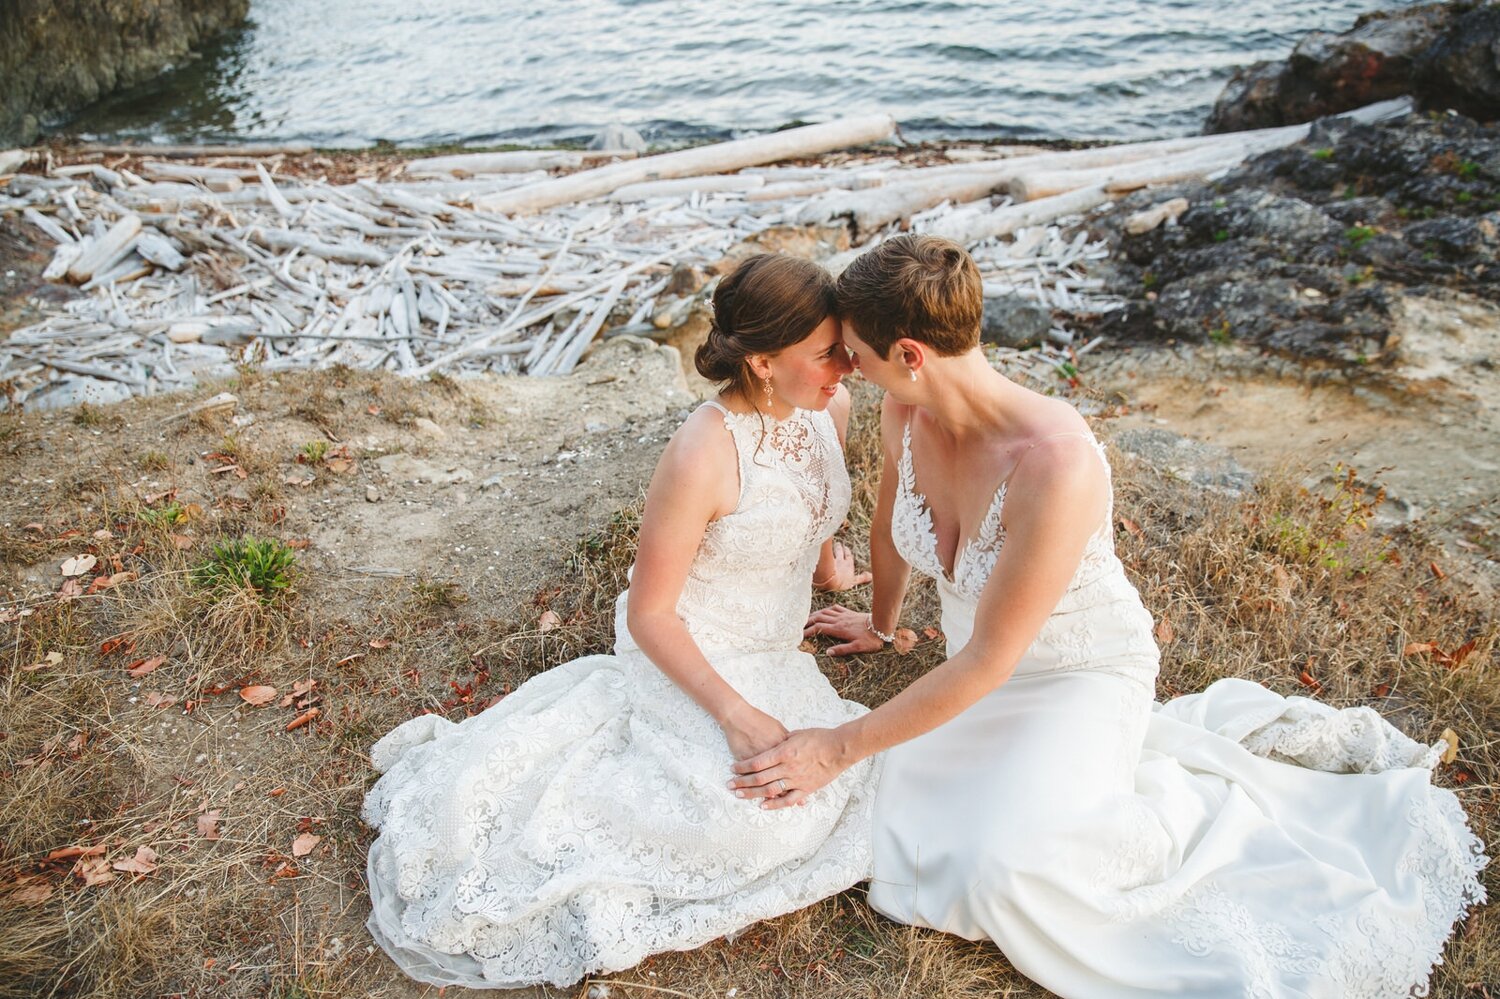 Wedding day cuddles on the beach by Satya Curcio Photography